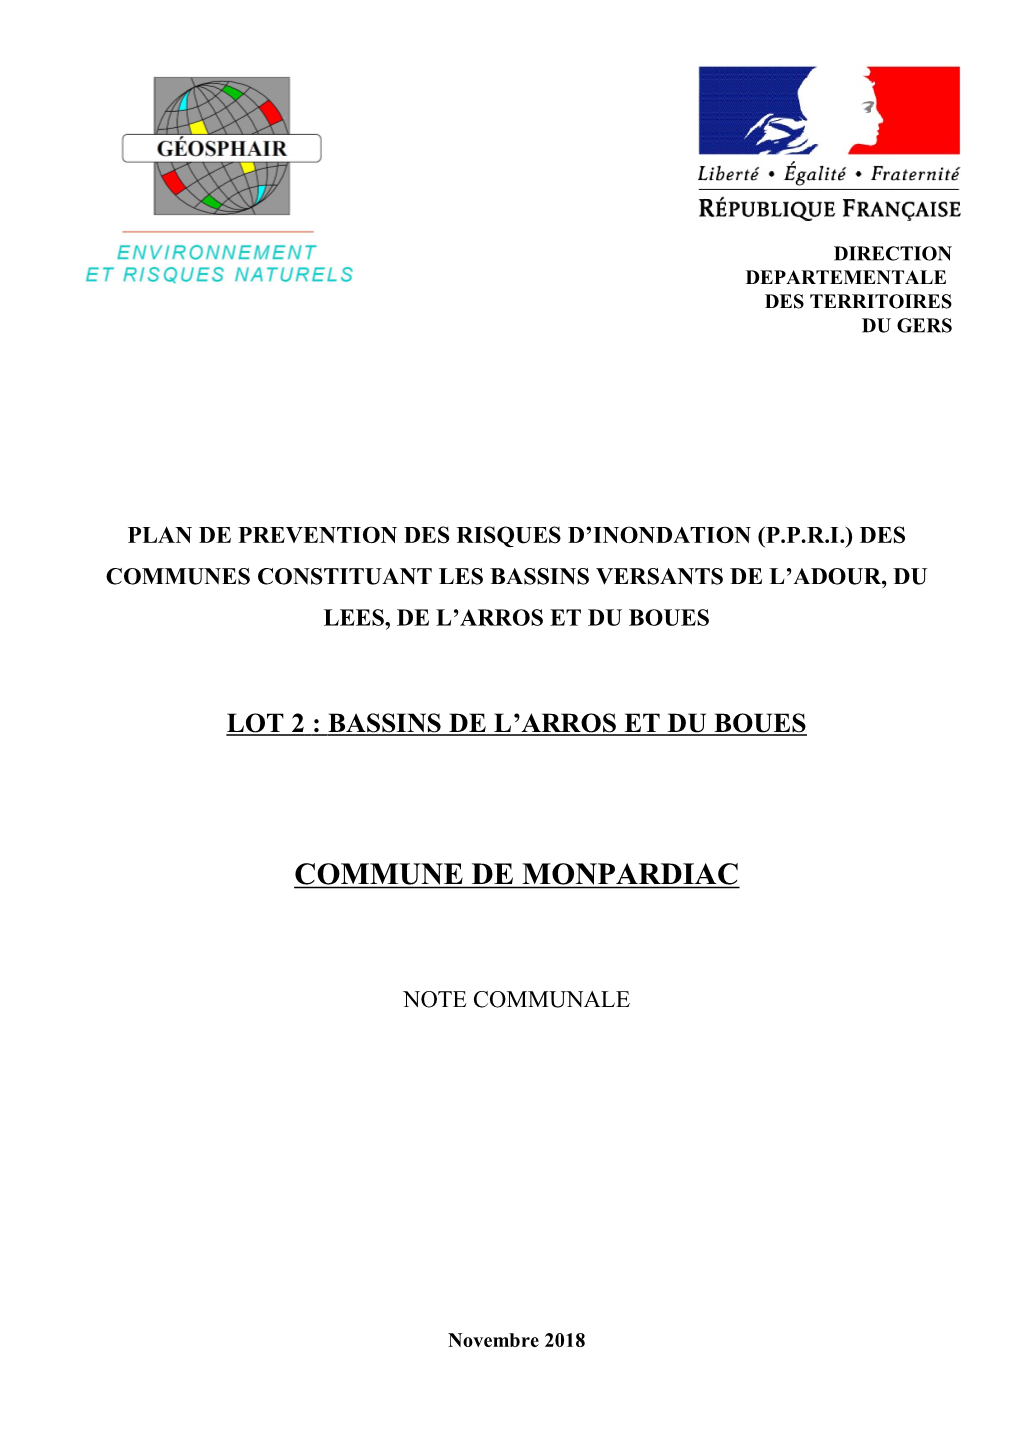 Note Communale De Monpardiac